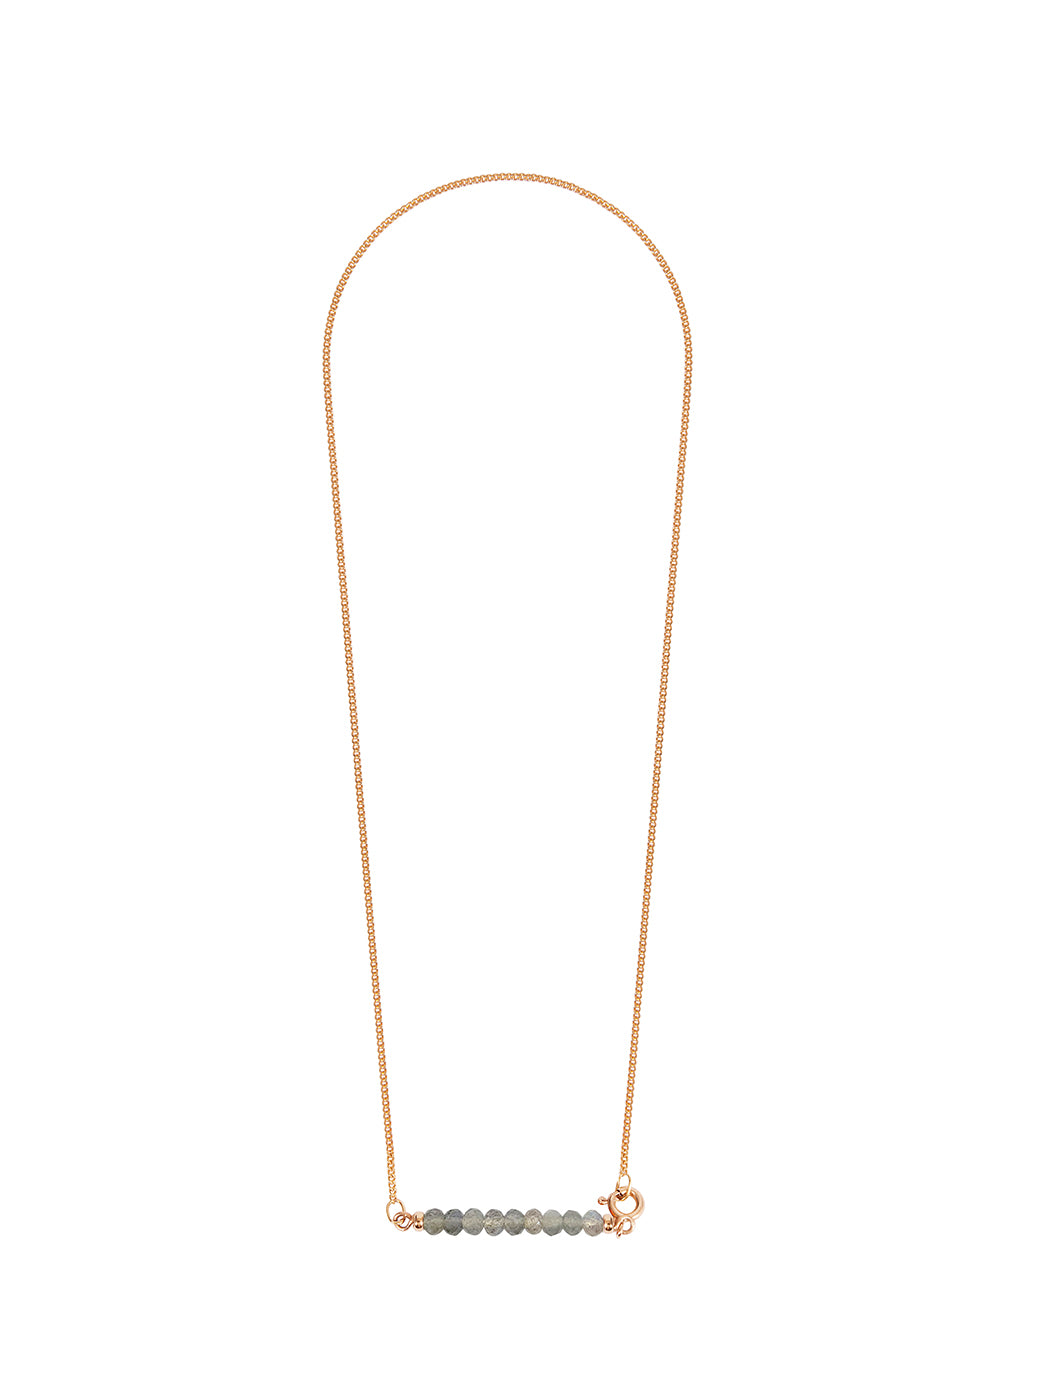 Fiorina Jewellery Gold Friendship Necklace Labradorite